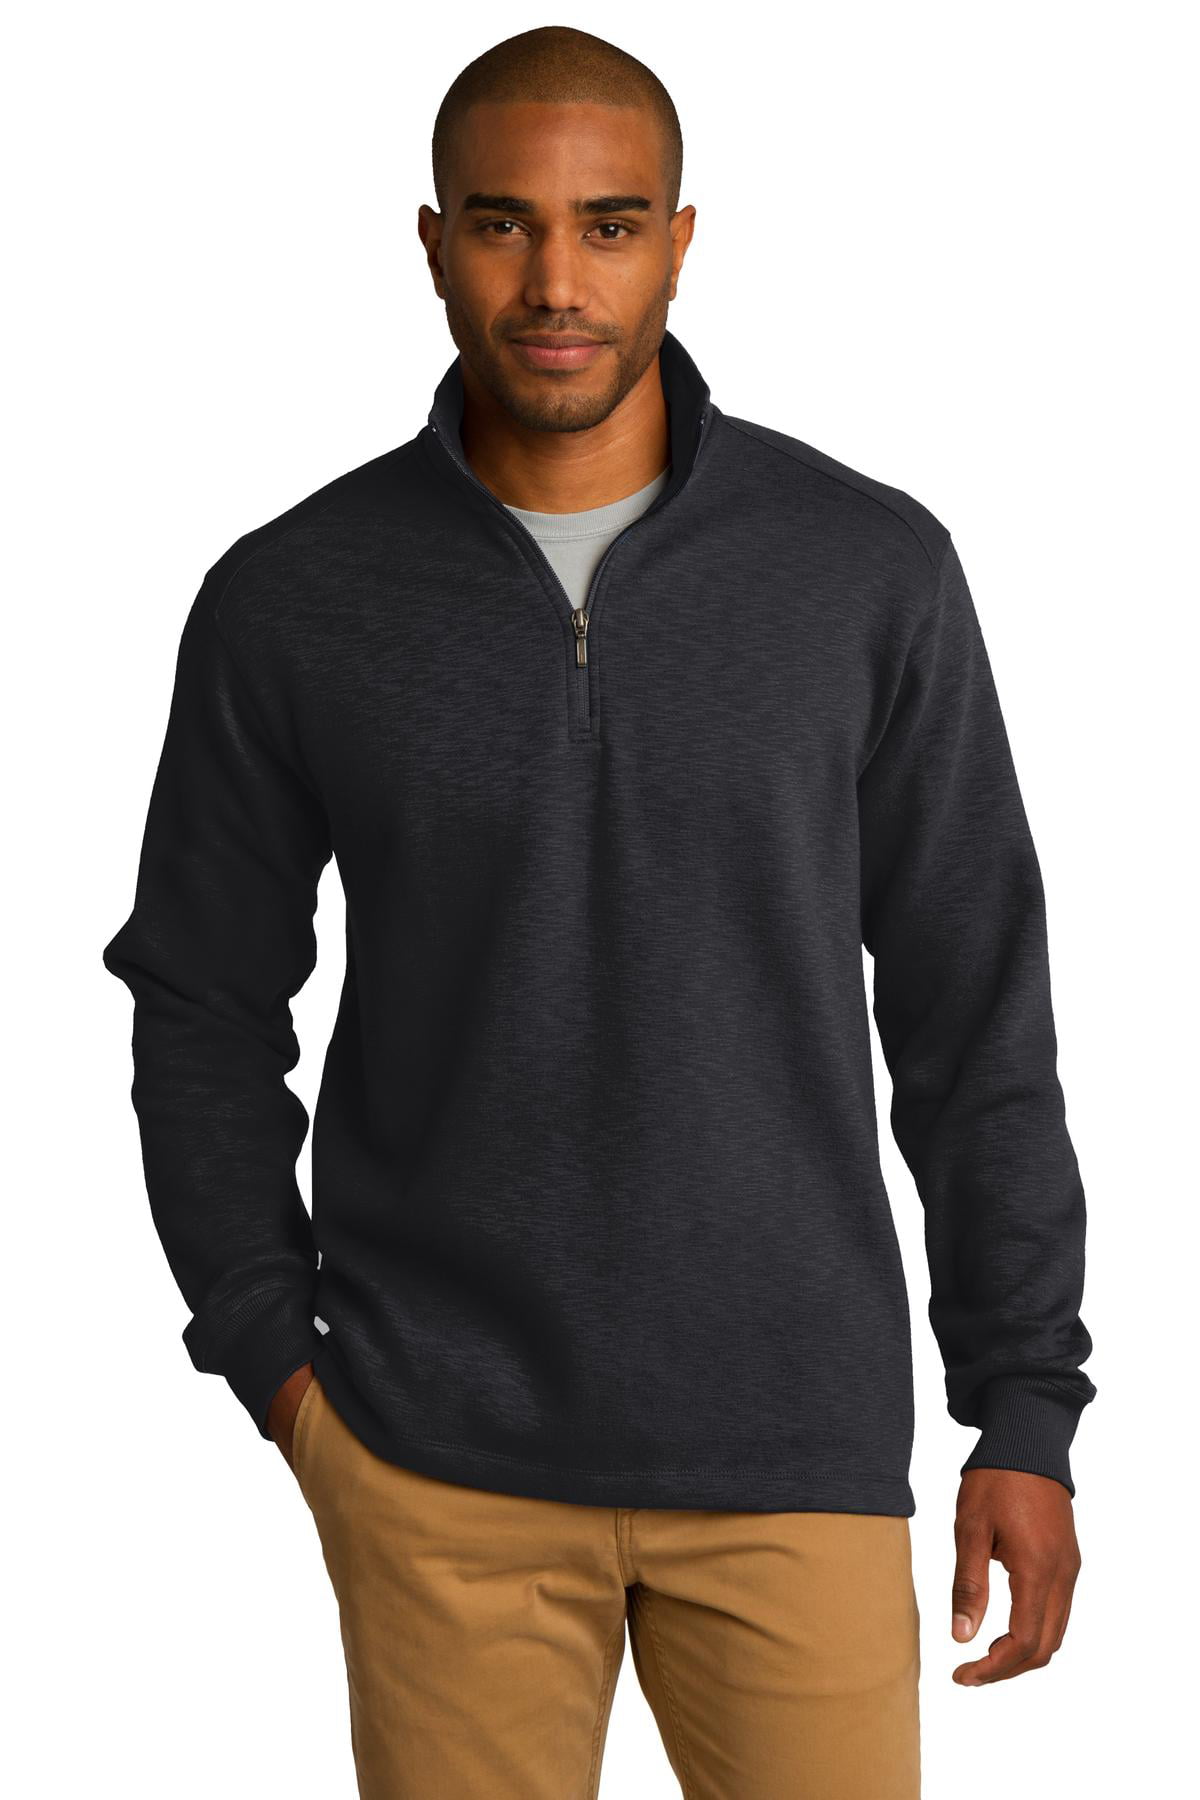 OTS NCAA Adult Mens NCAA Mens Fleece 1/4-Zip Pullover 